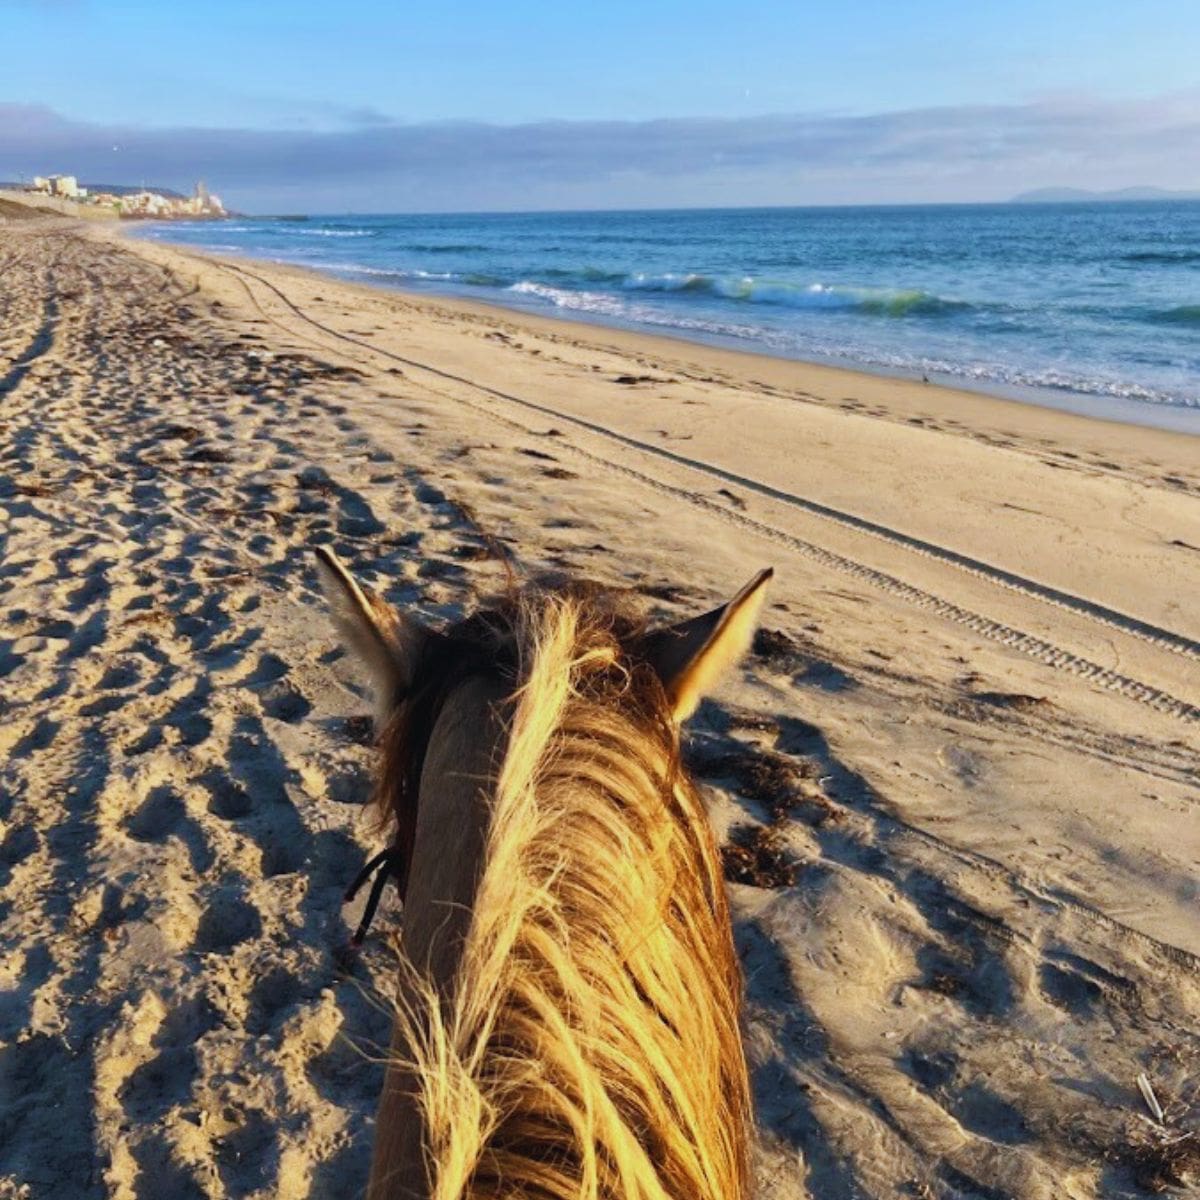 Horseback Riding On The Beach In California